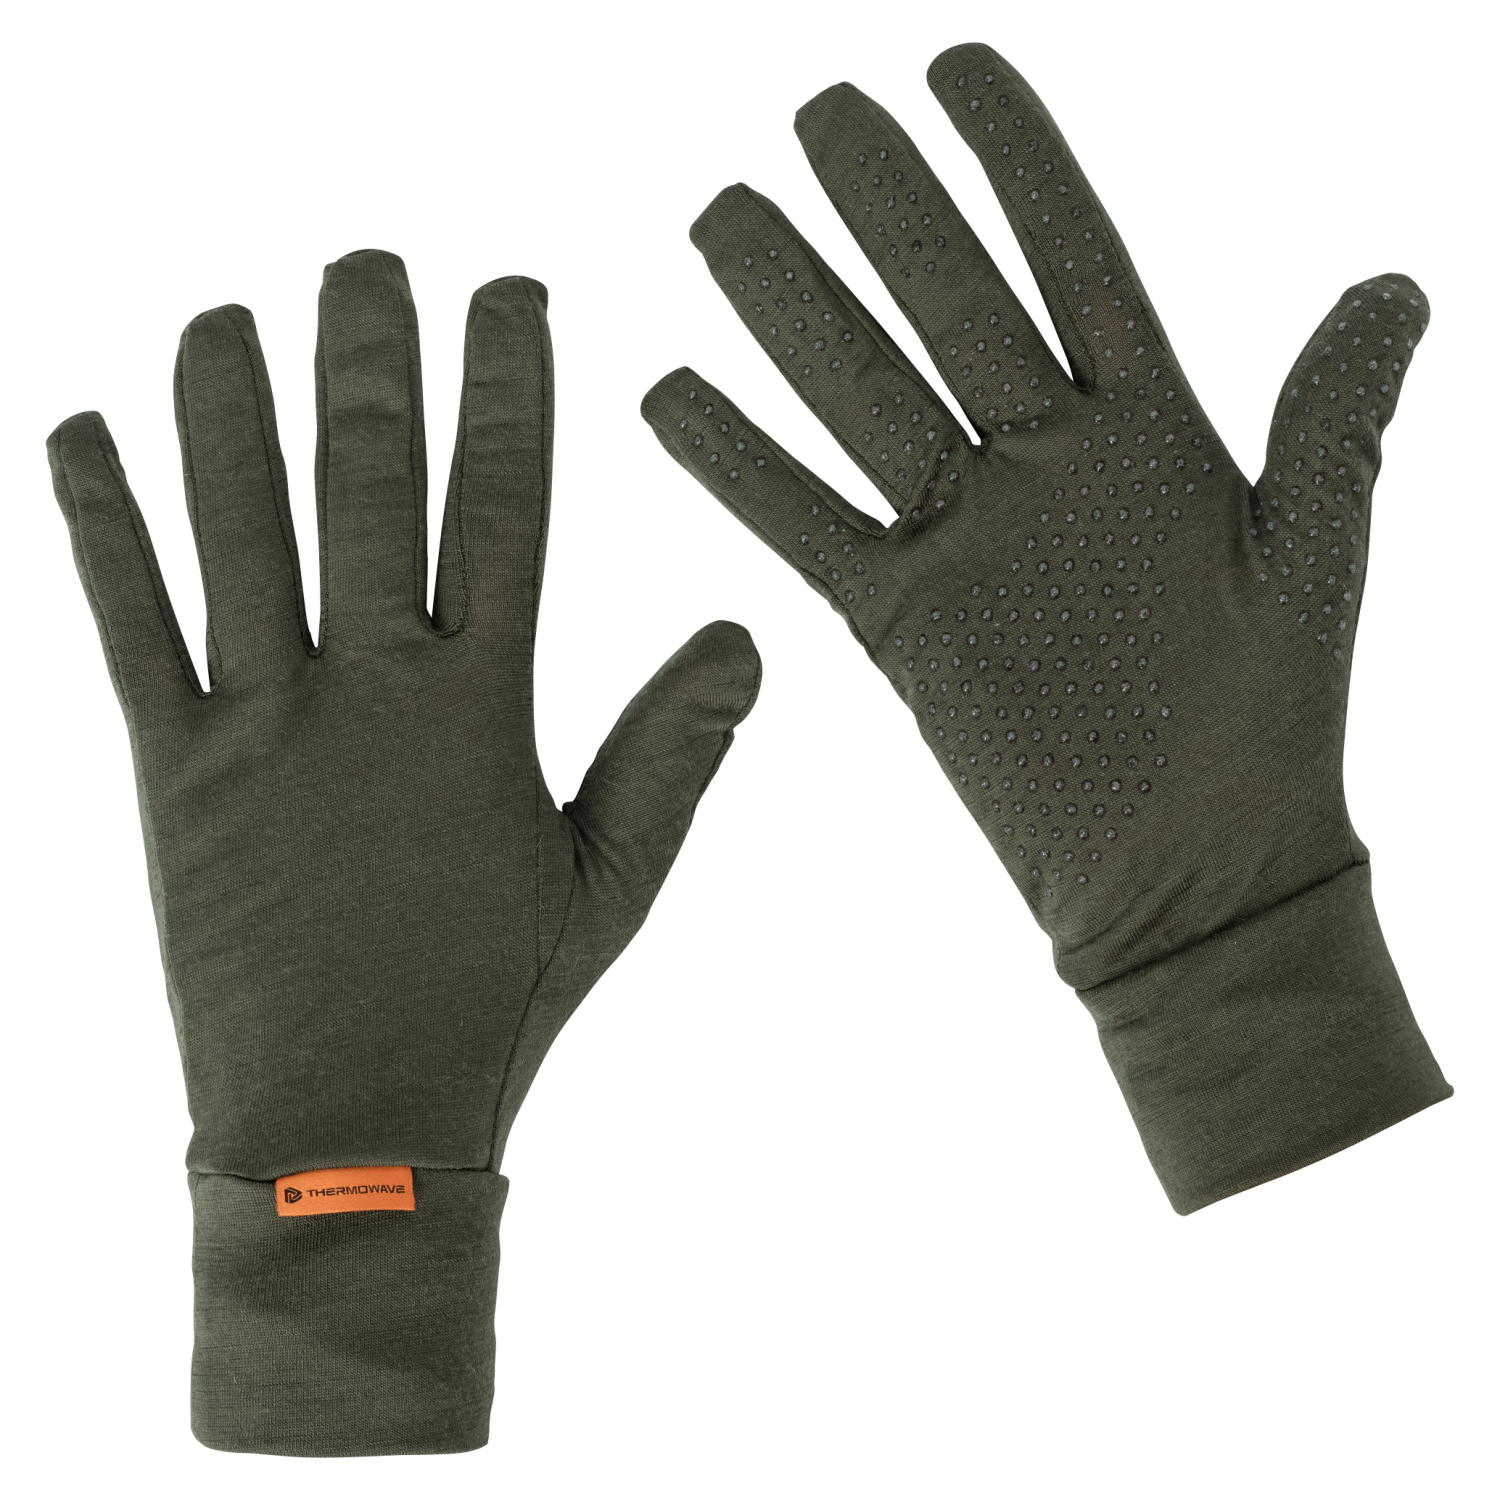 https://images.askari-sport.com/en/product/1/large/thermowave-mens-gloves.jpg